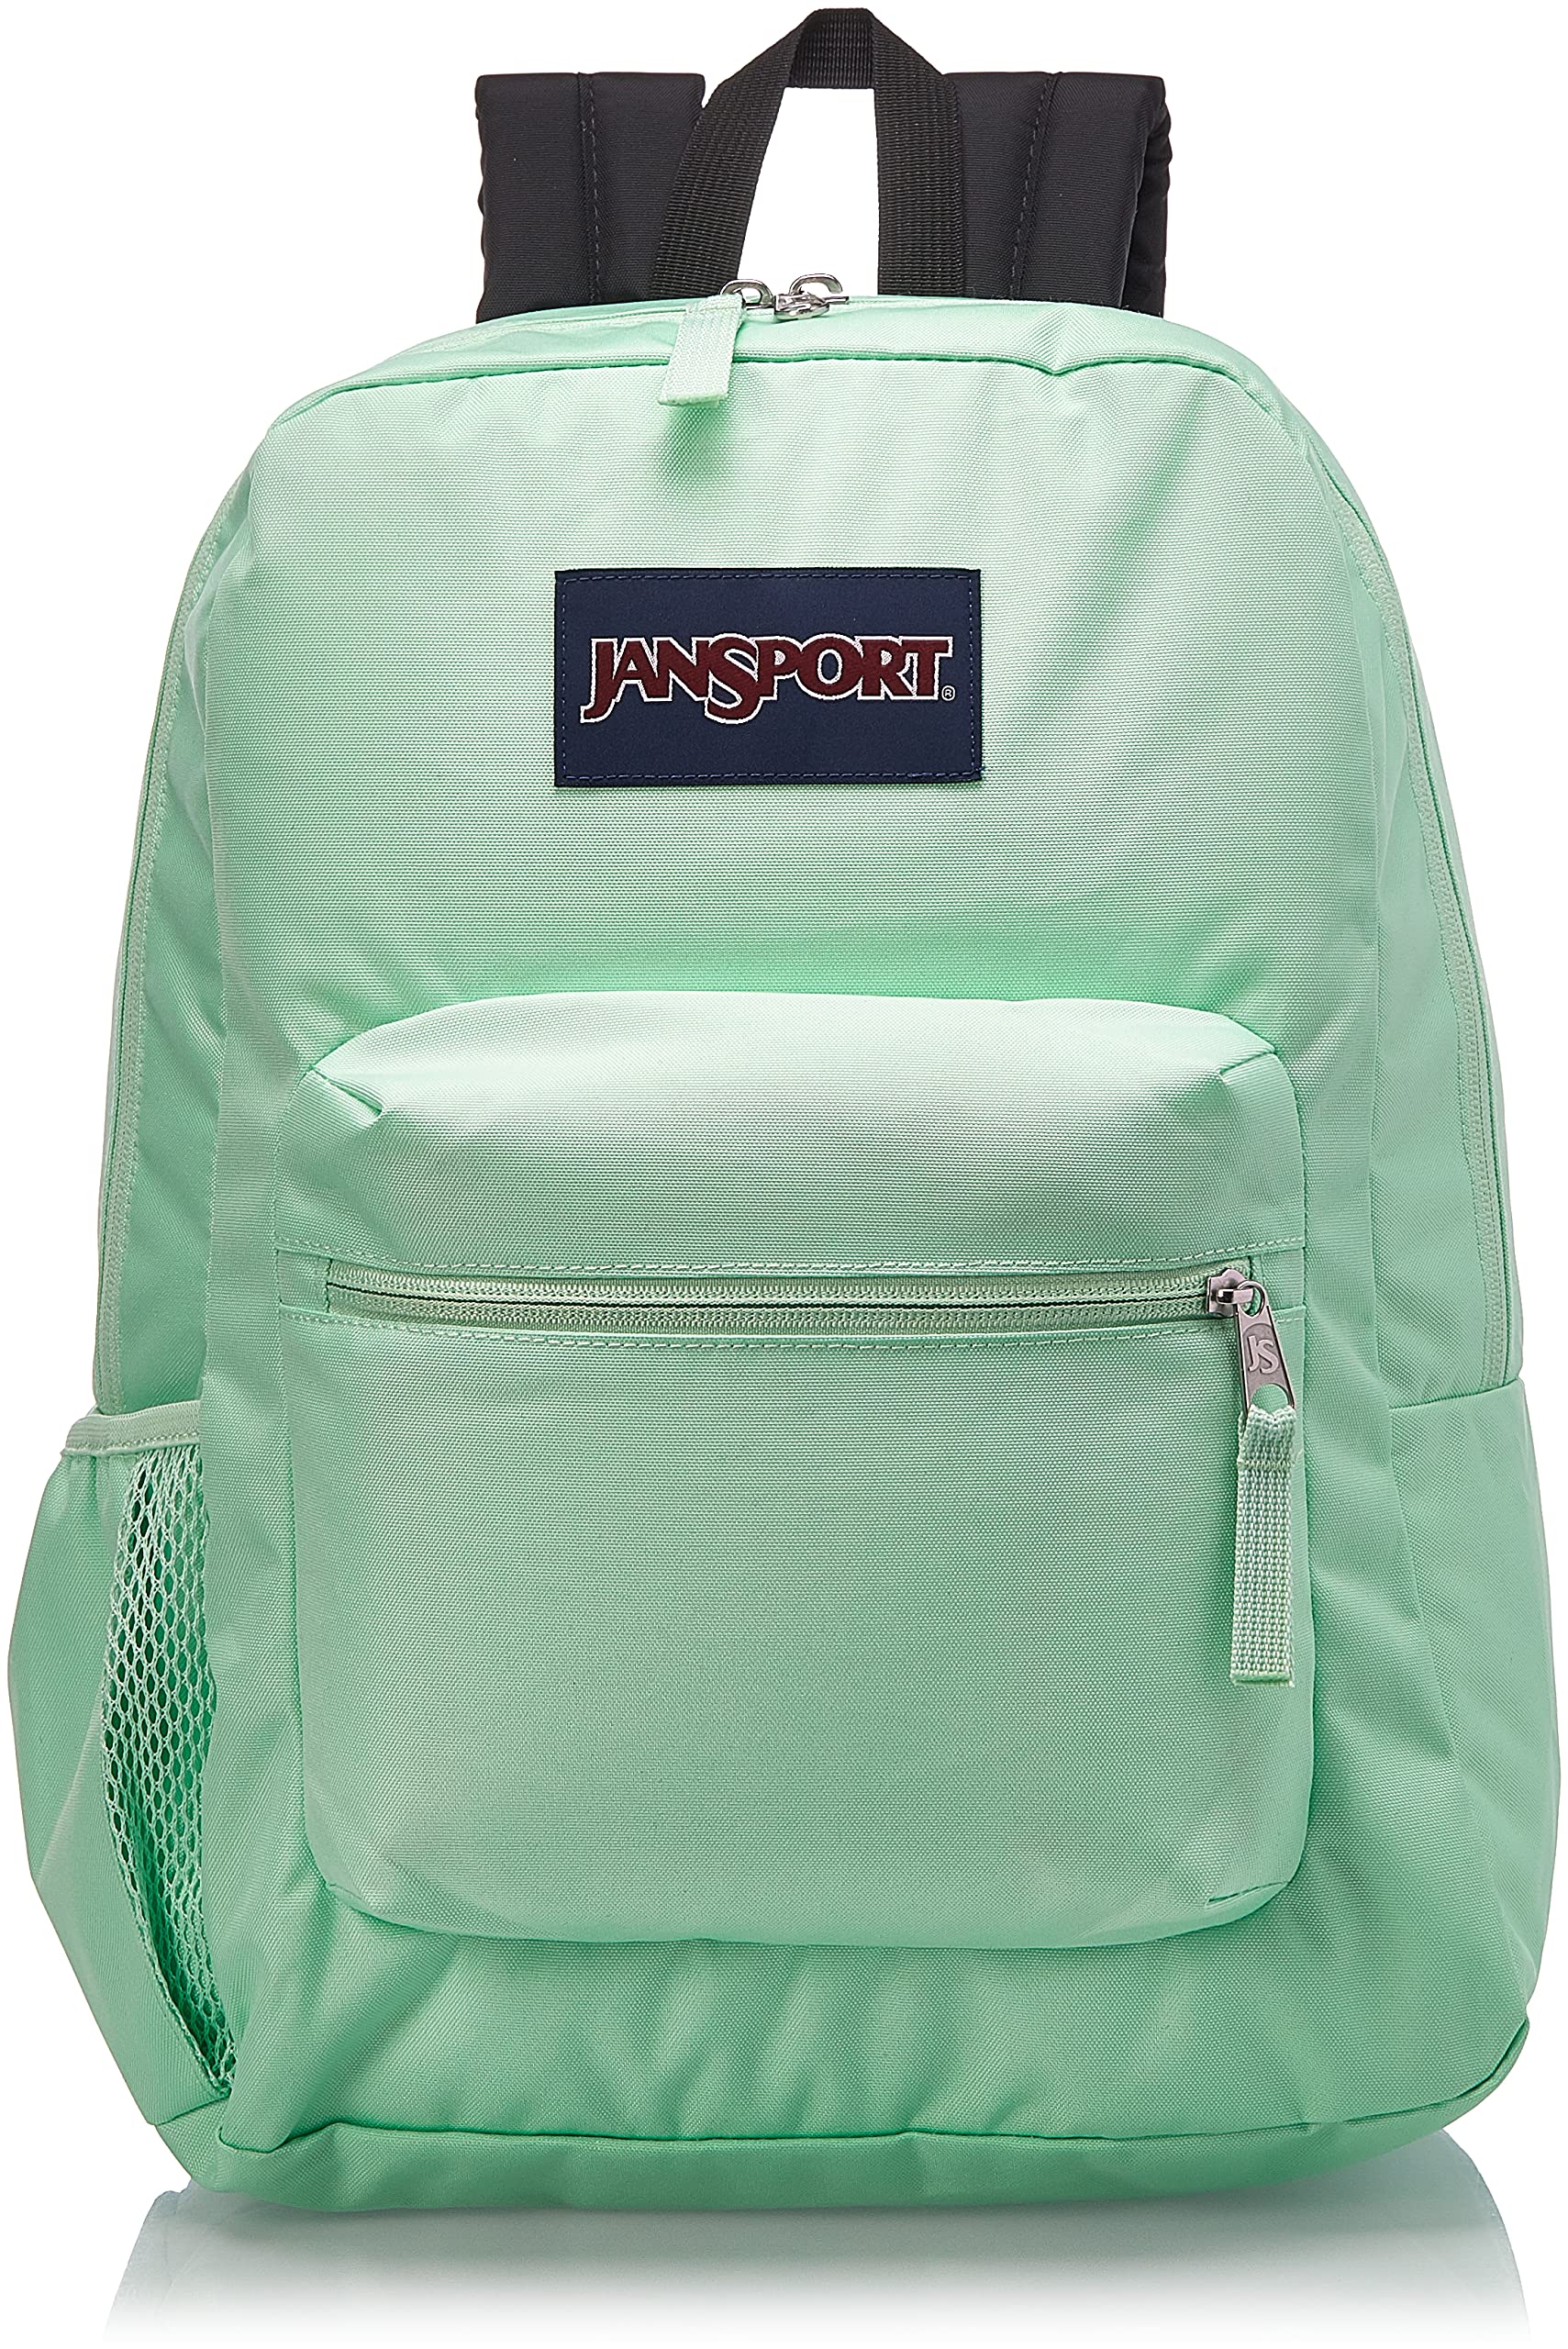 JanSport Daypack Backpacks